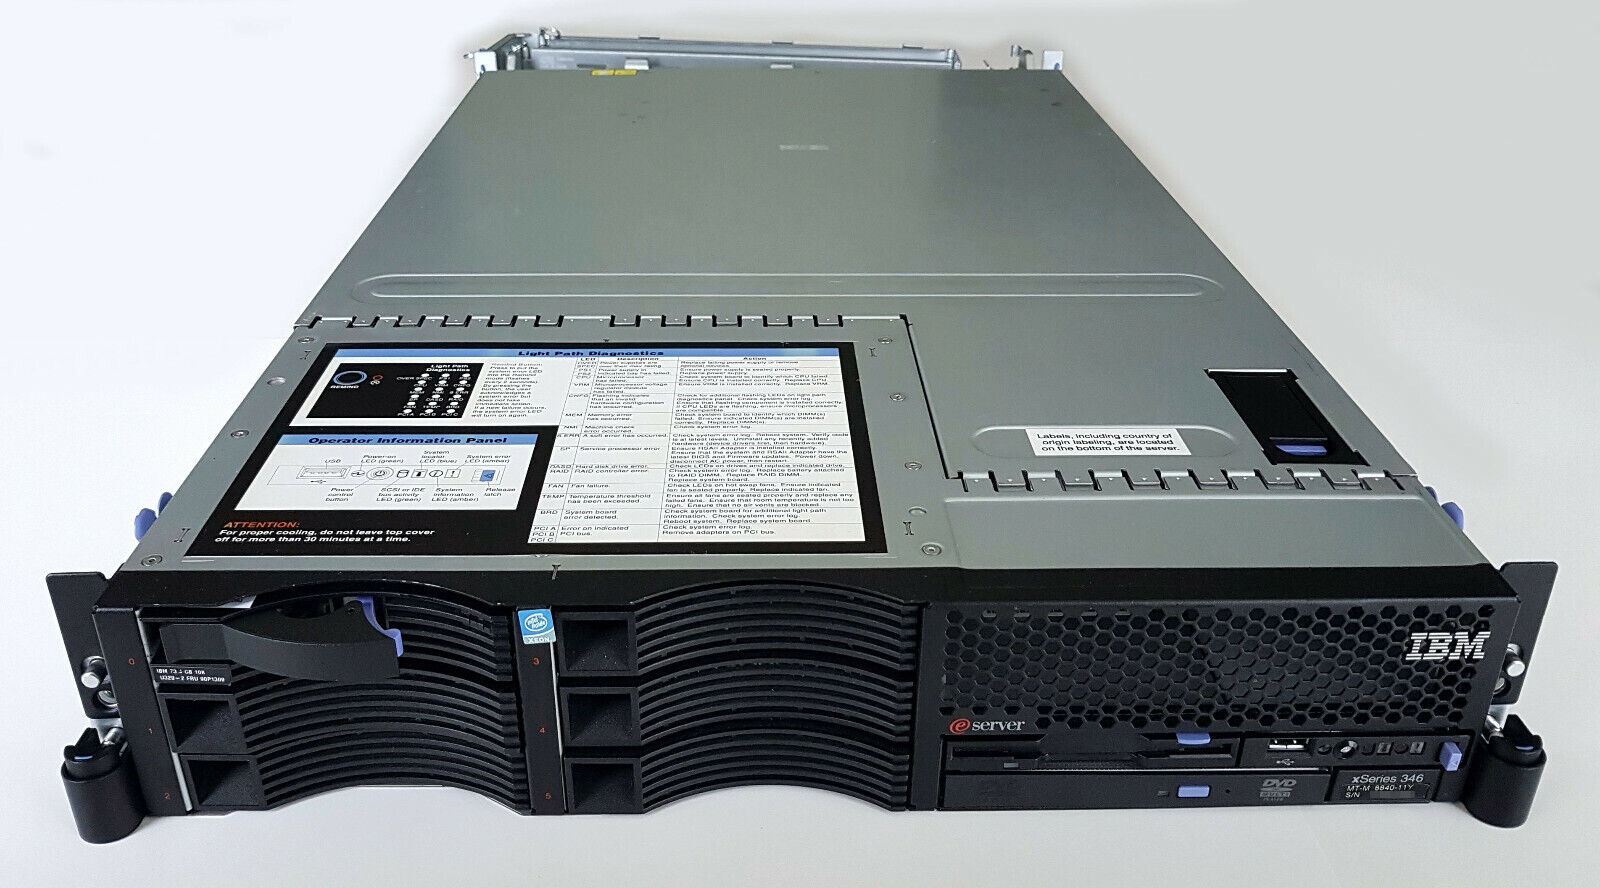 IBM eServer xSeries 346 3GHz Xeon 1Gb SDRAM 73Gb SCSI 2U Rack Server